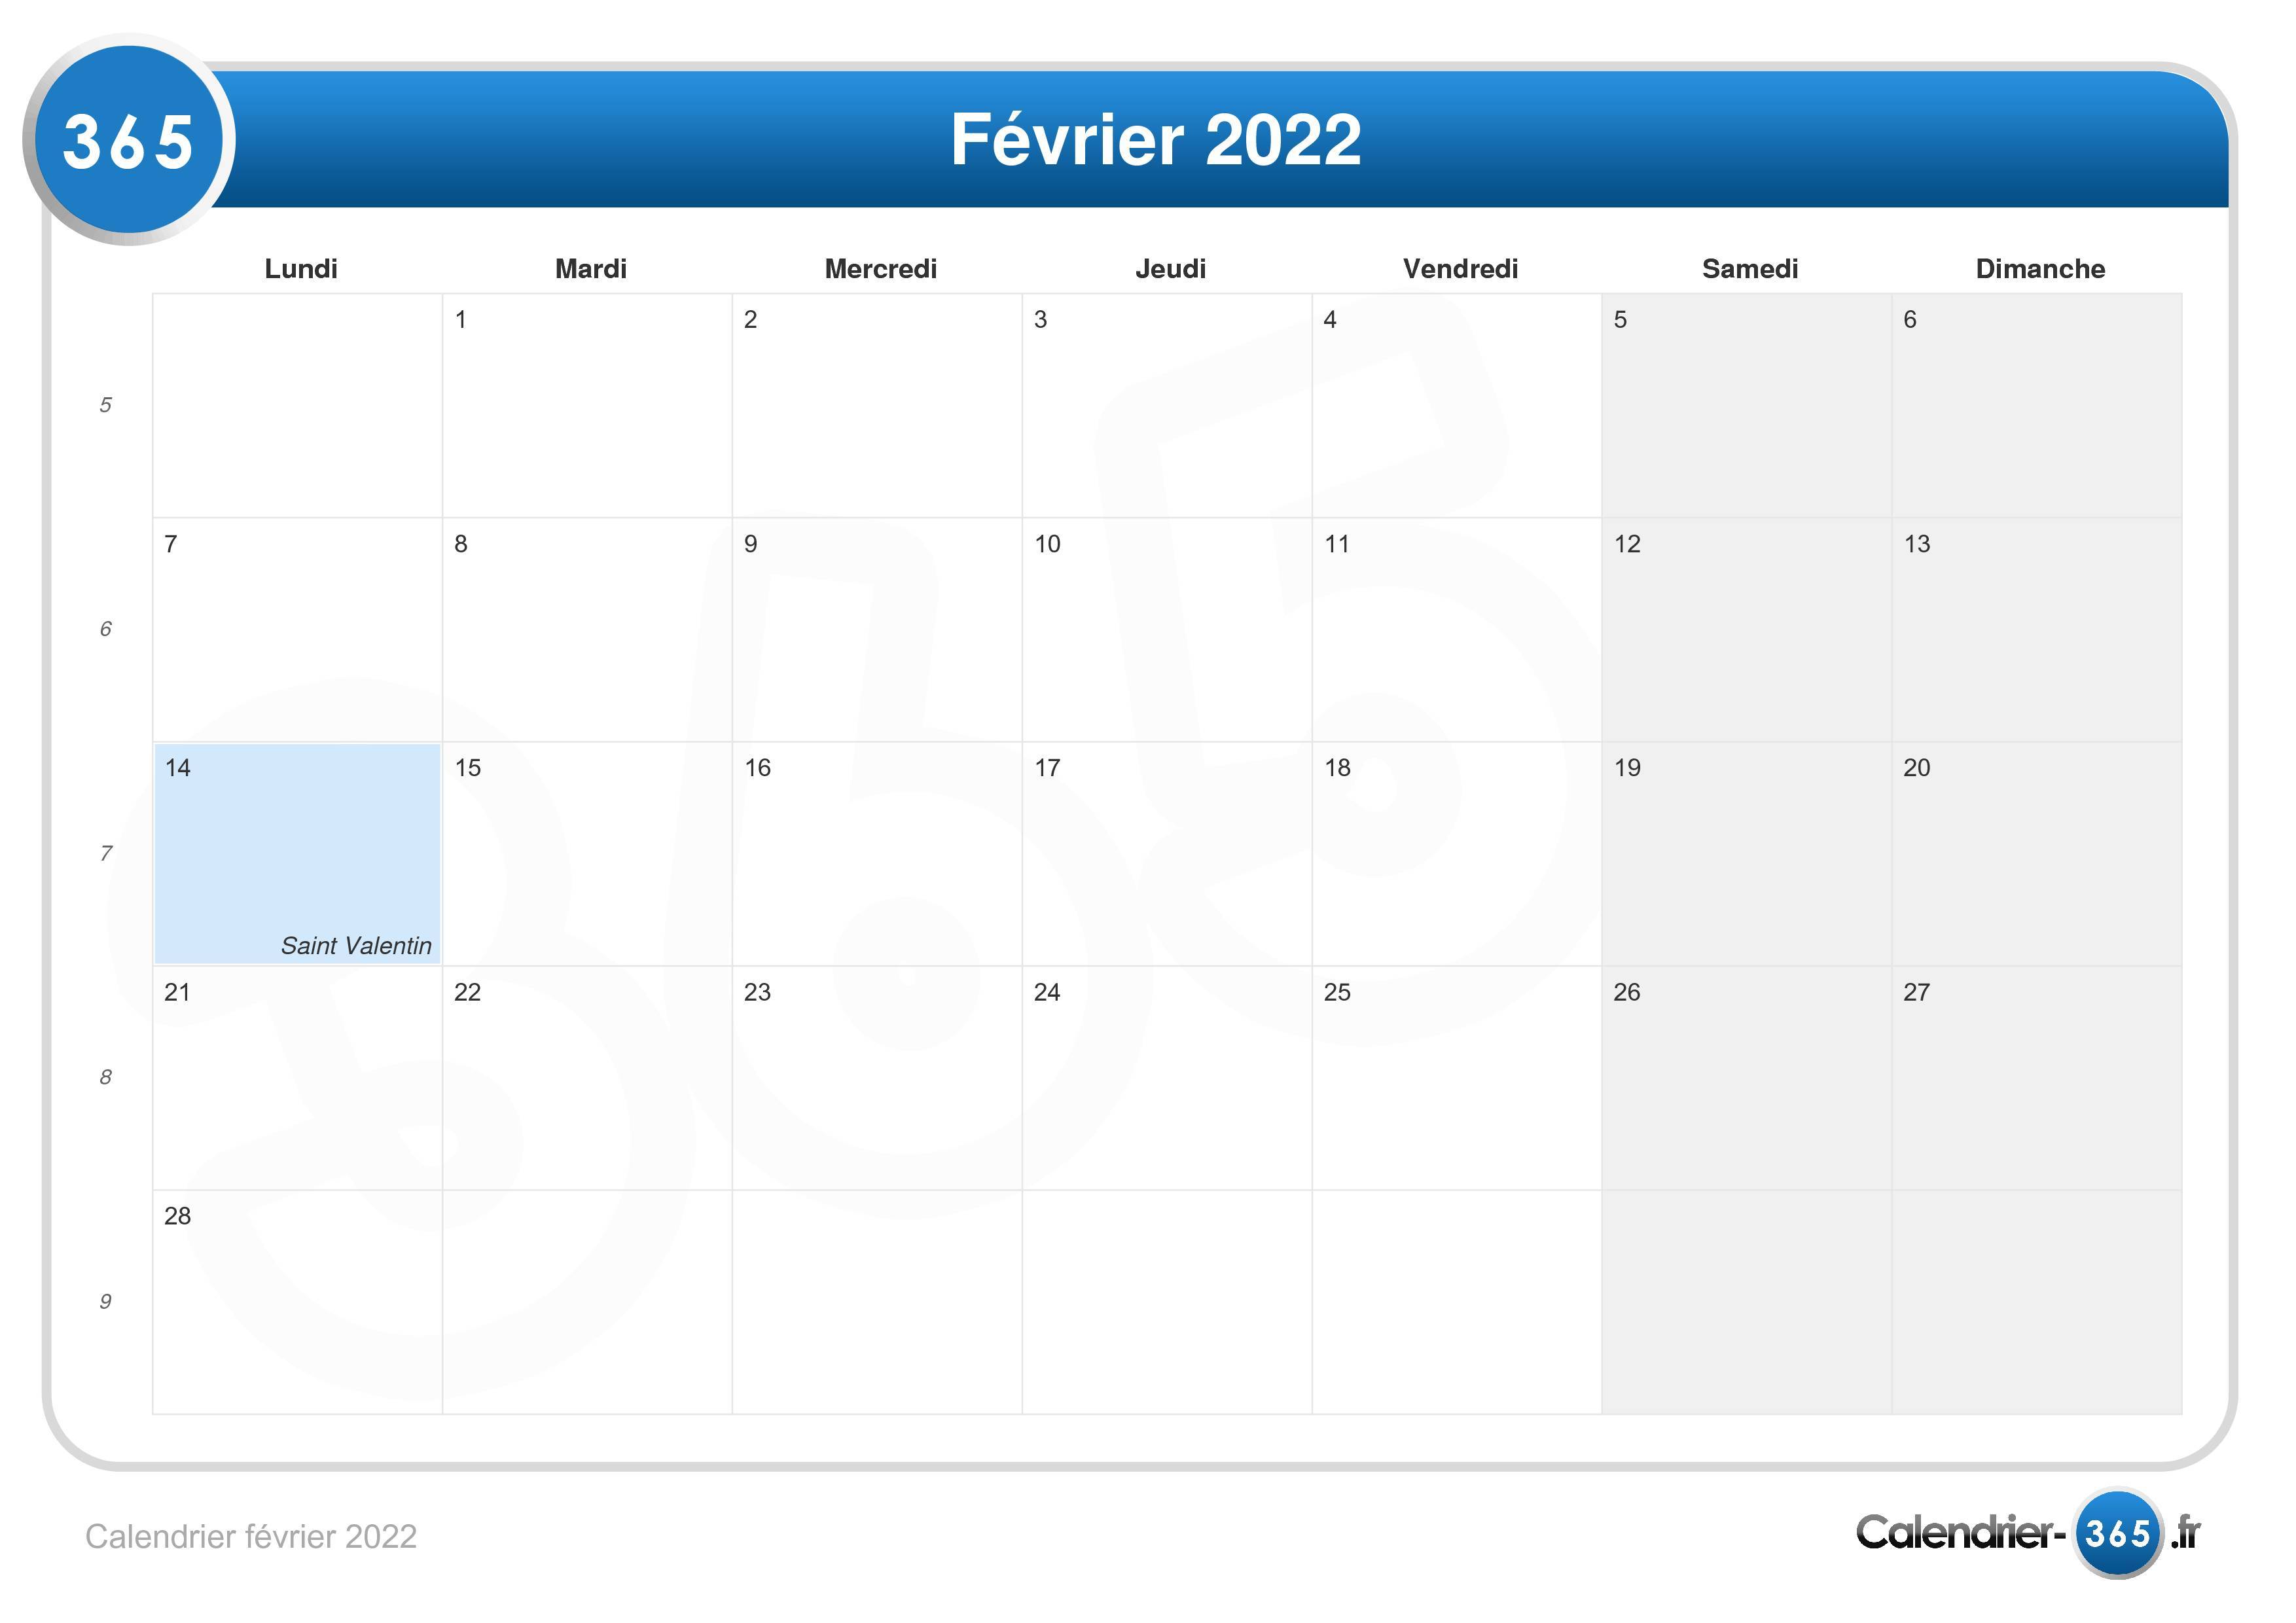 Calendrier Fevrier 2022 Calendrier février 2022